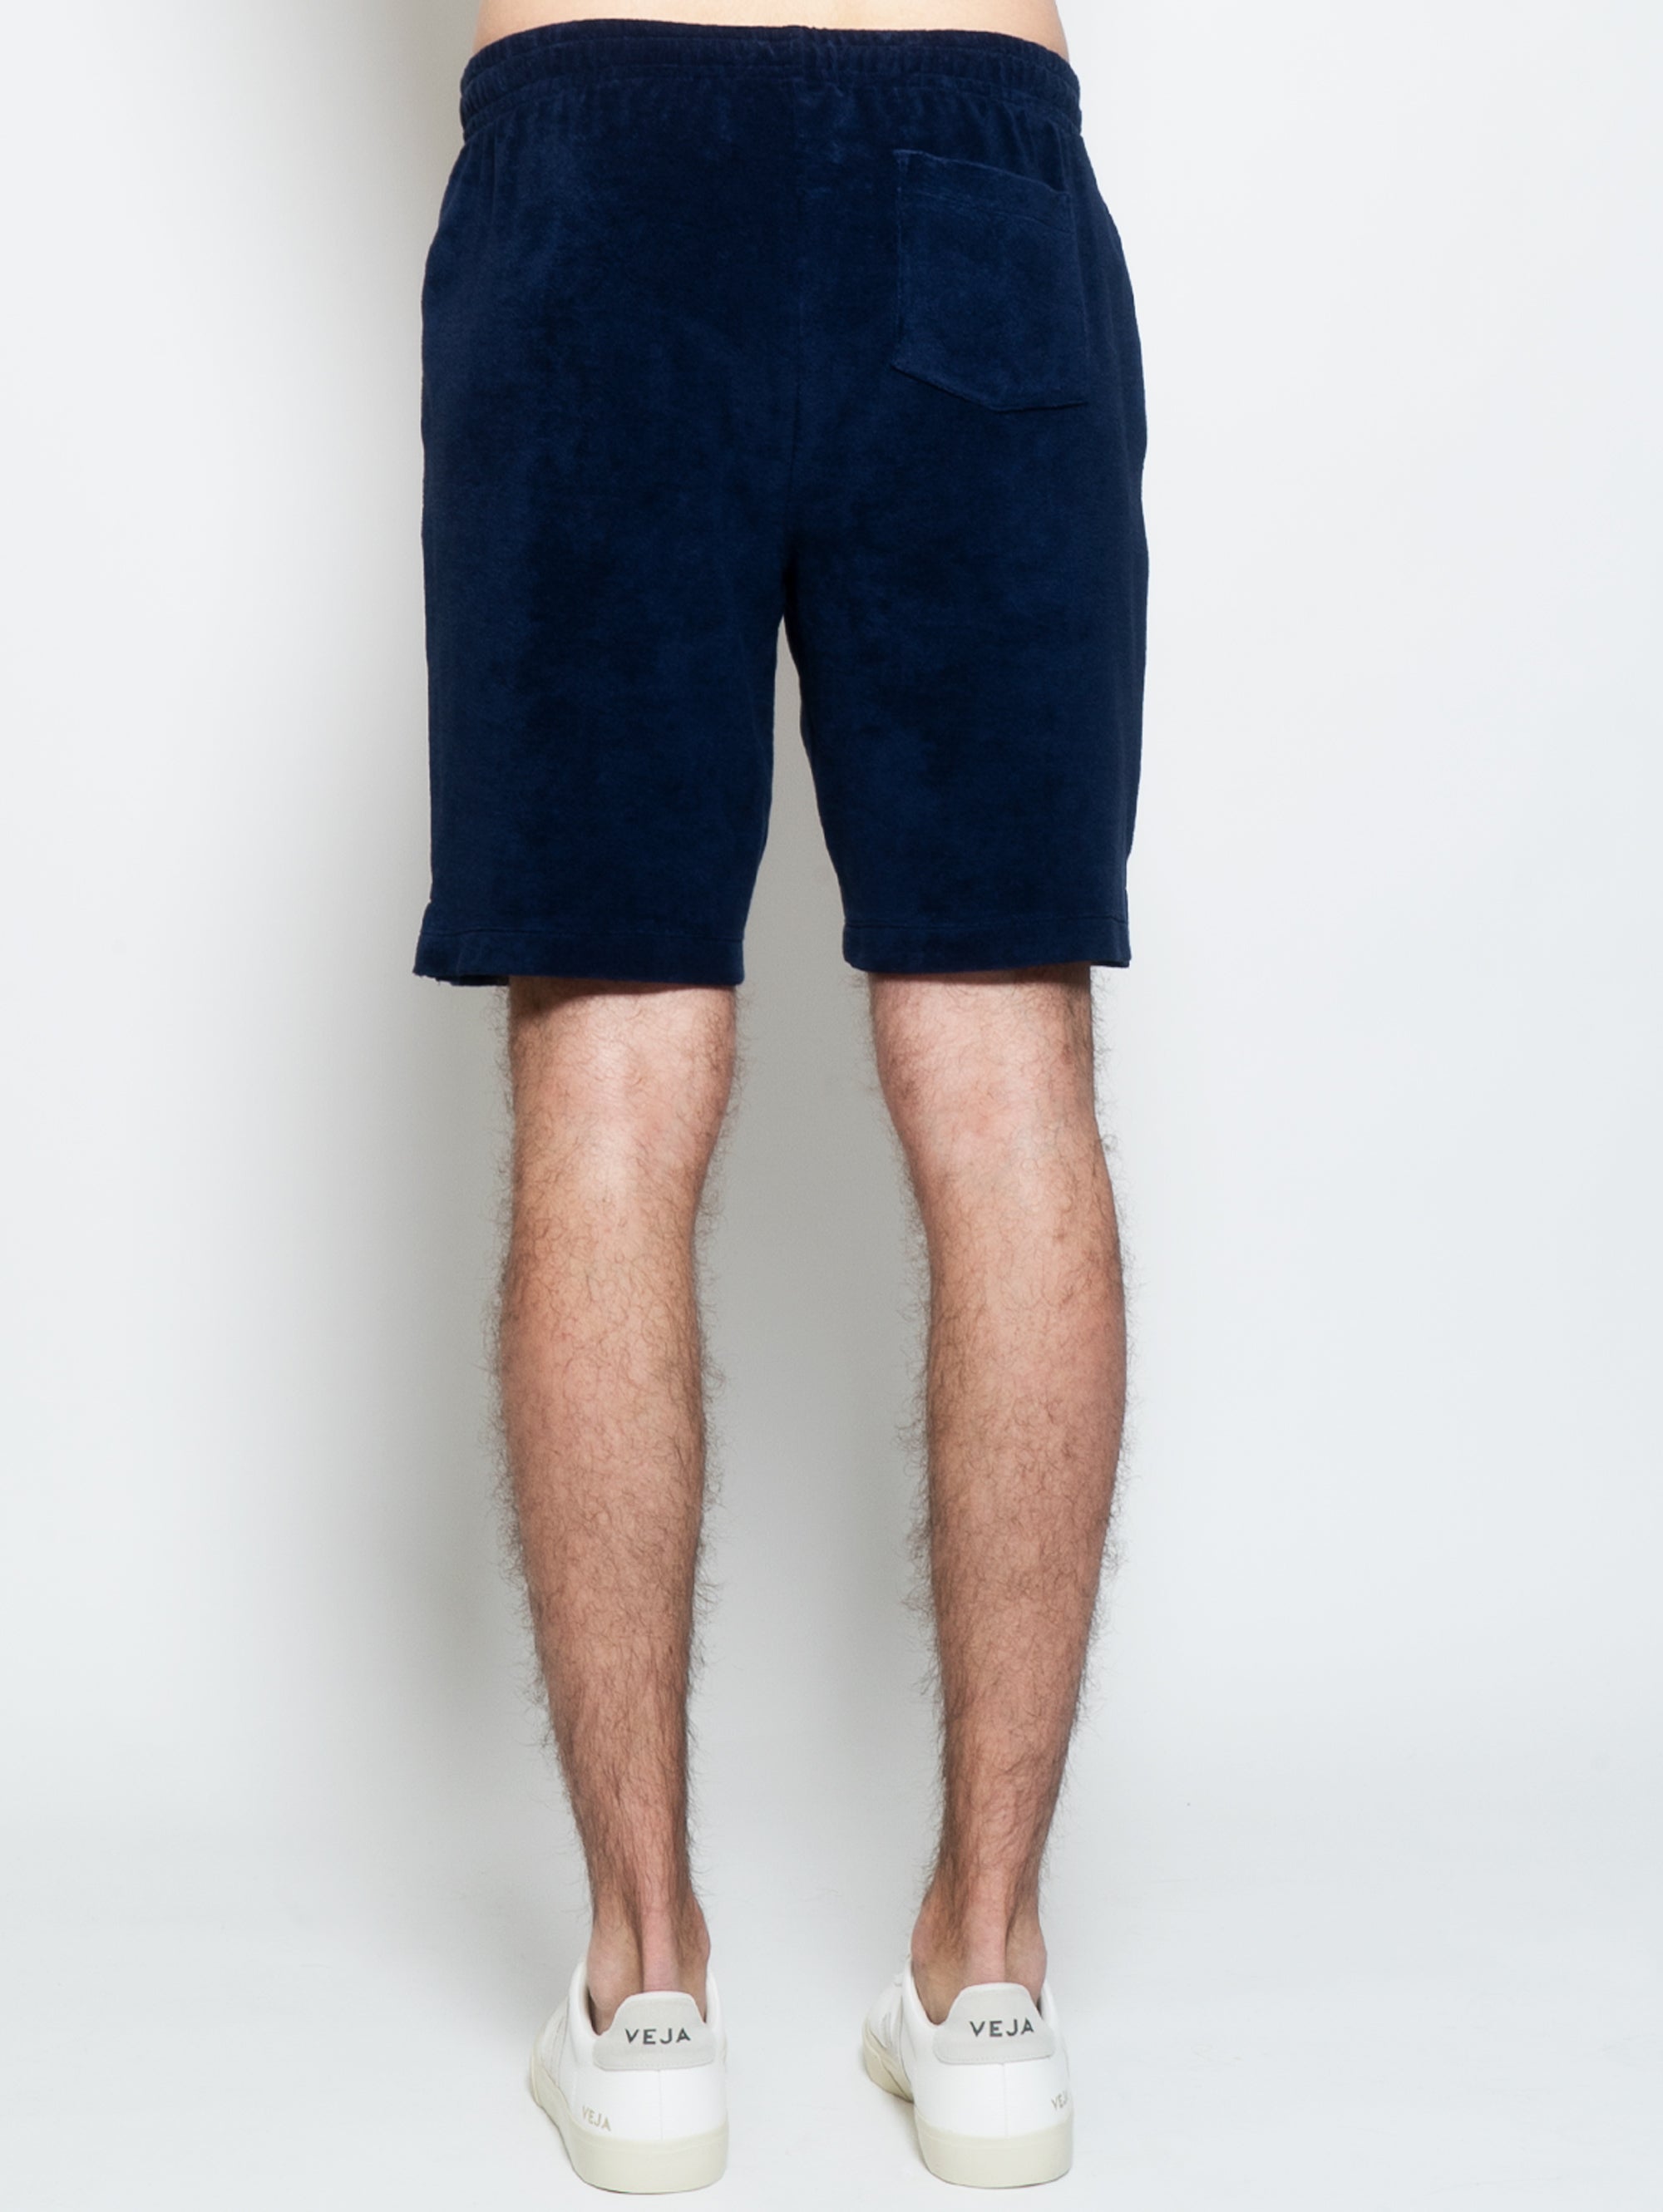 Sponge Shorts with Blue Drawstring